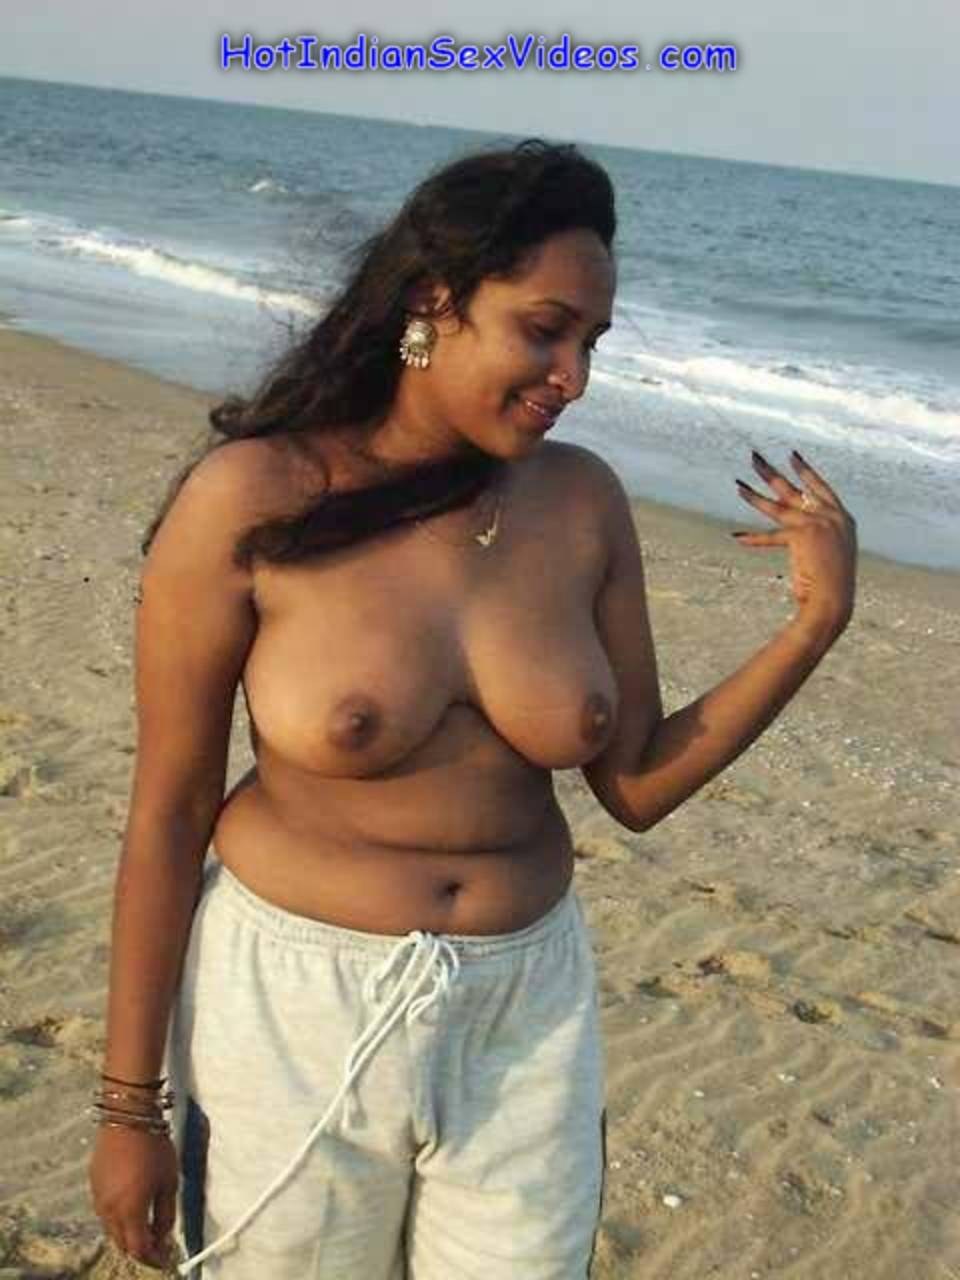 Indian babe natural beauty naked